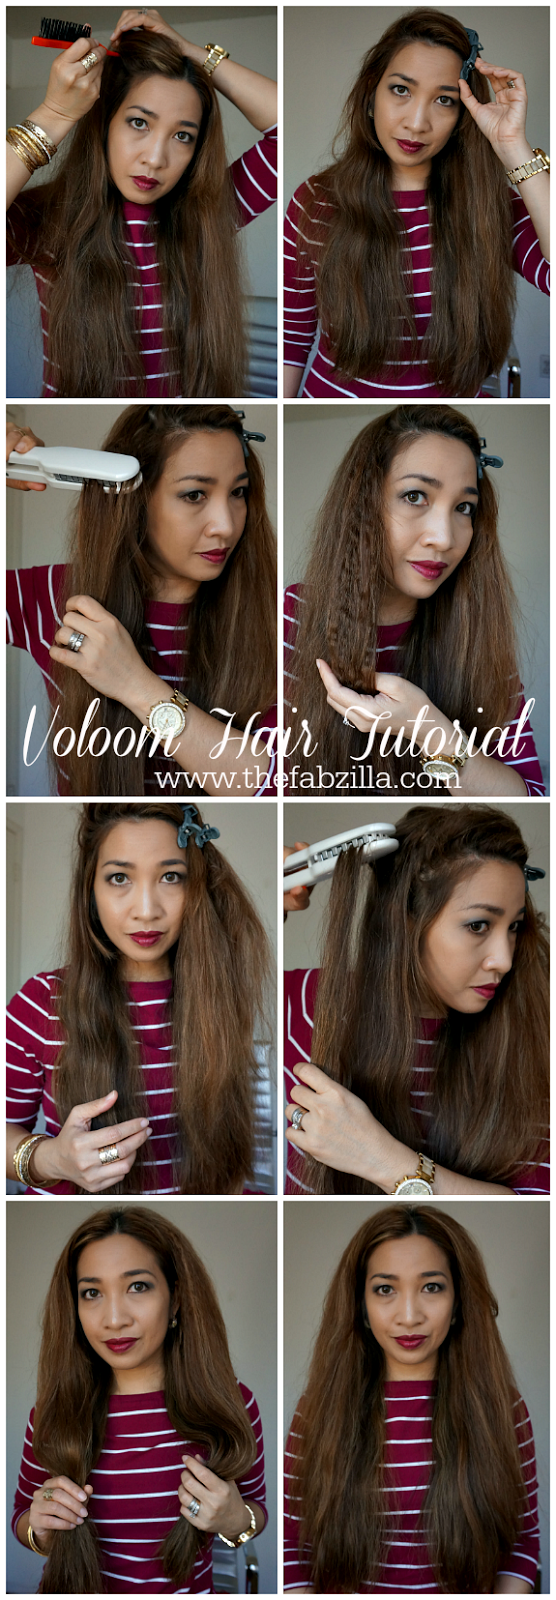 VOLOOM Hair Volumizing Iron, Review, How to Use, Volumized Hair, Bombshell Hair, Jennifer Lopez Hairstyle, Diva Hair, Tutorial